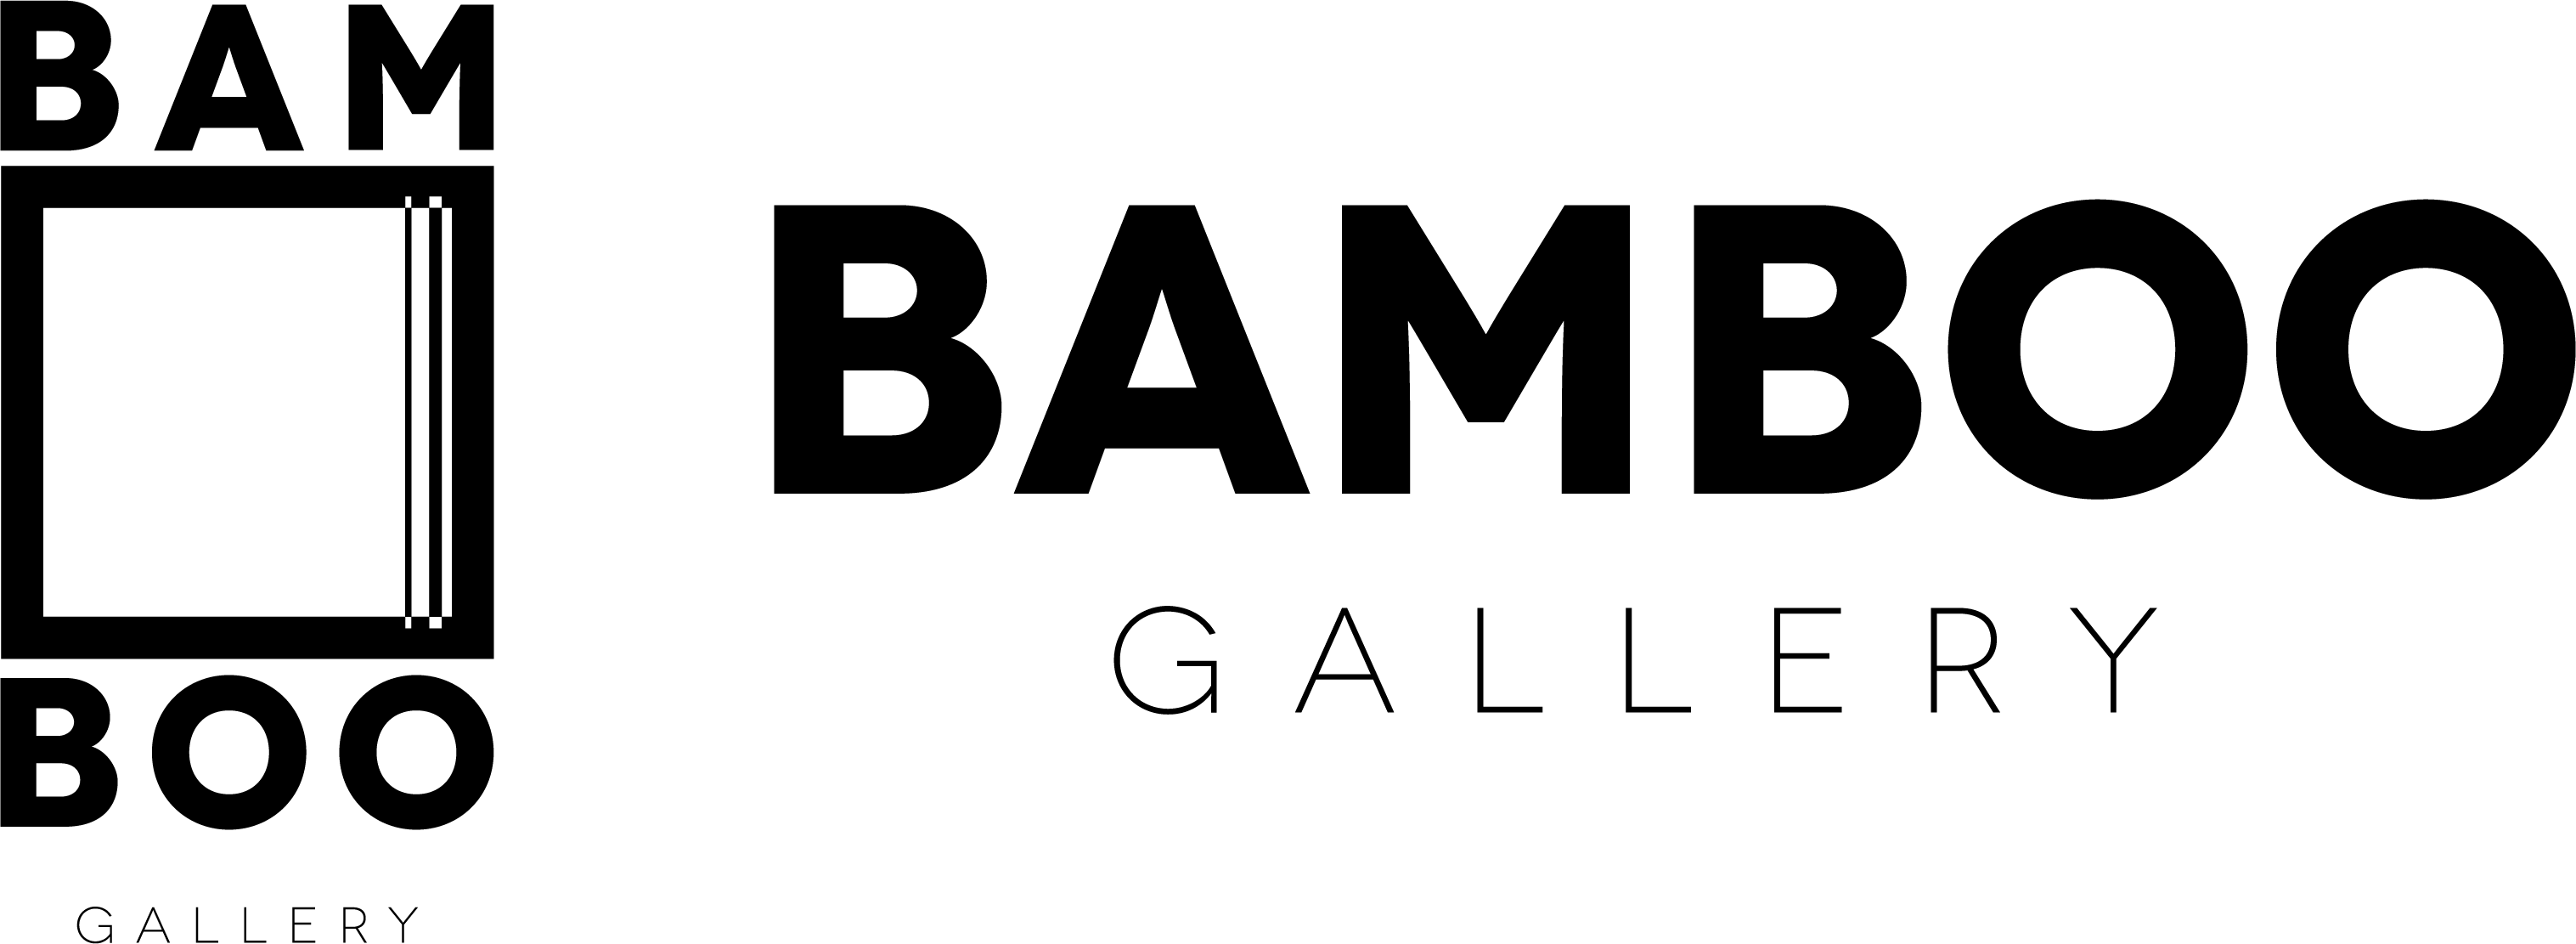 Gallery Bamboo